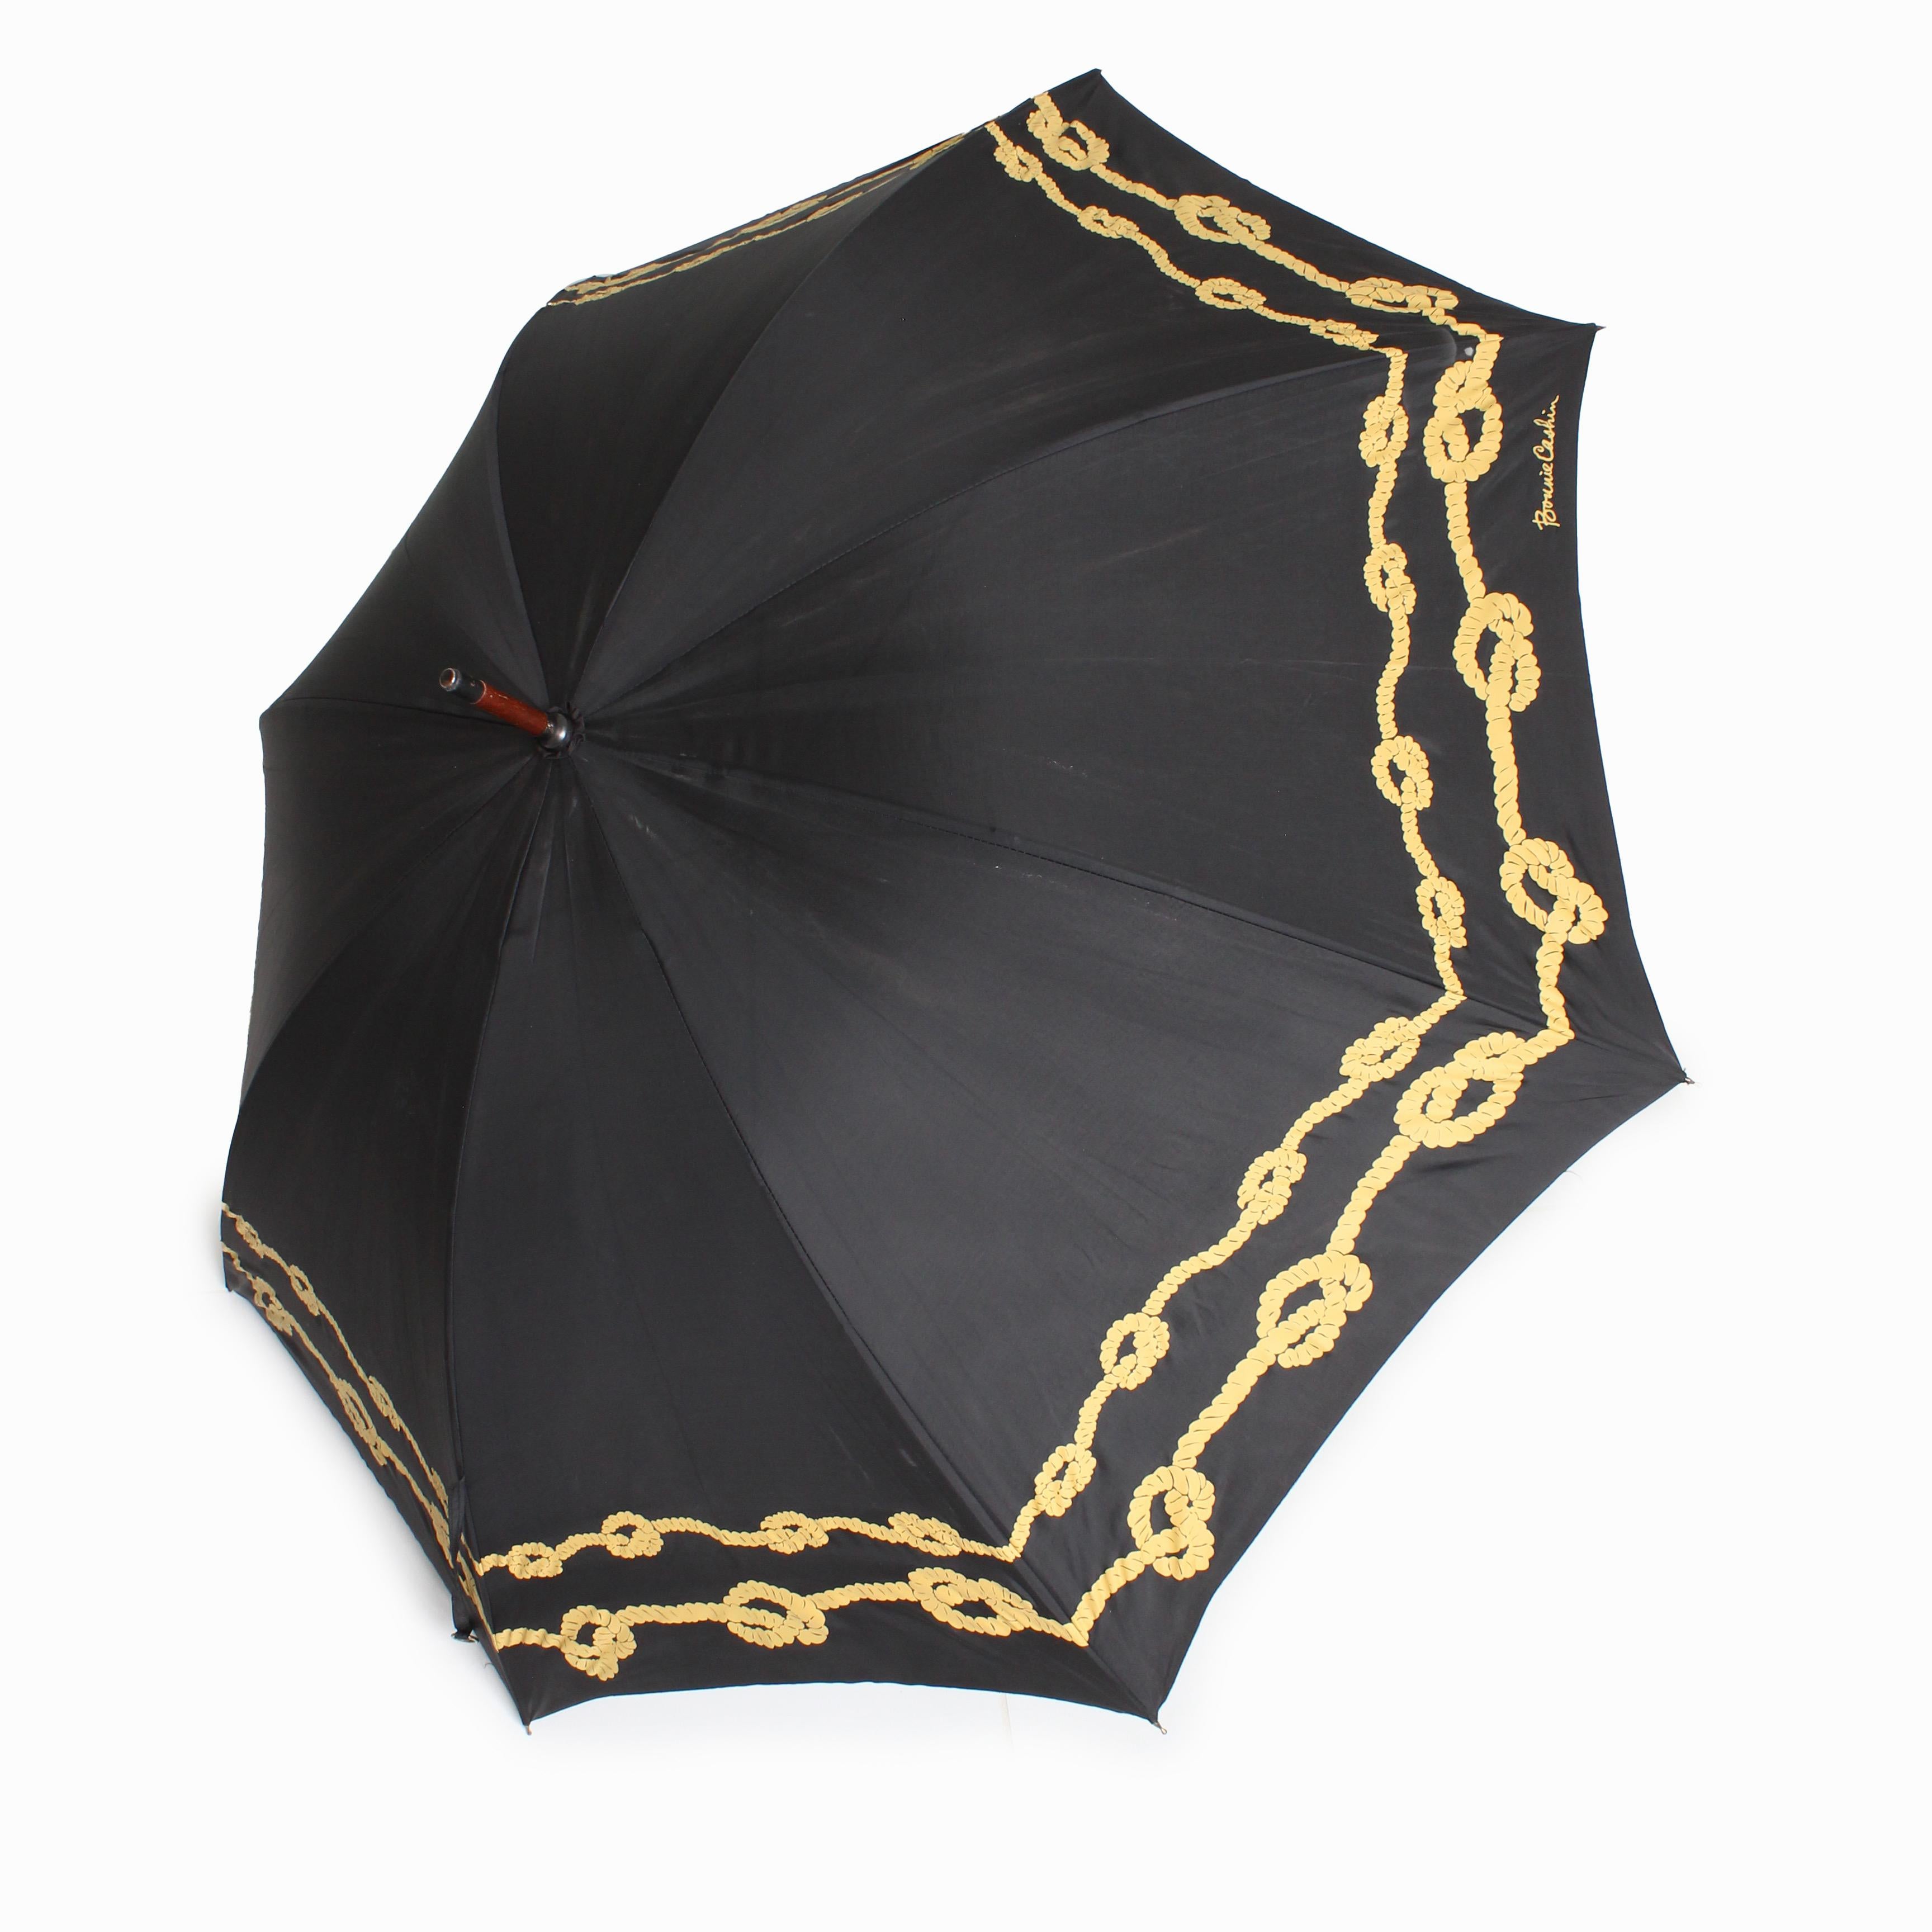 Bonnie Cashin Umbrella Black Gold Rope Print for D.Klein New York RARE Vintage In Good Condition For Sale In Port Saint Lucie, FL